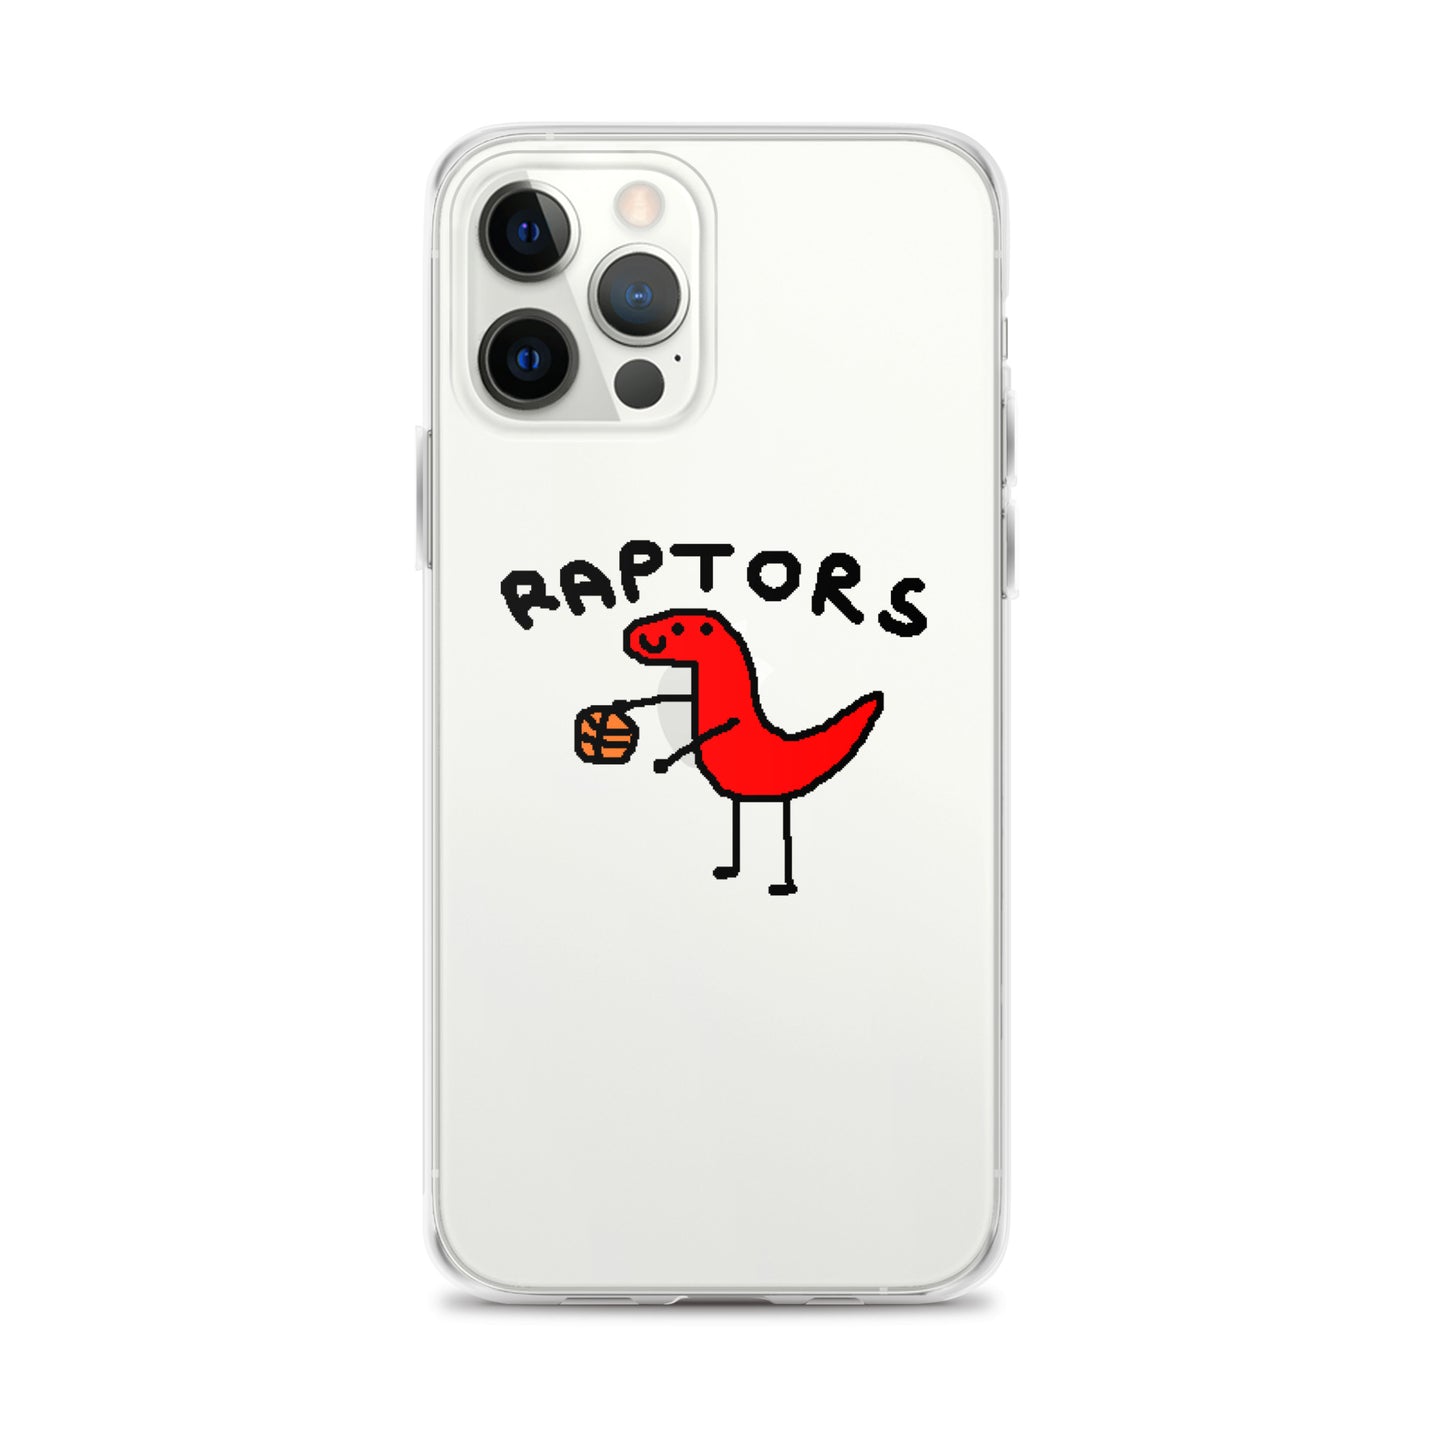 Raptor Phone Case